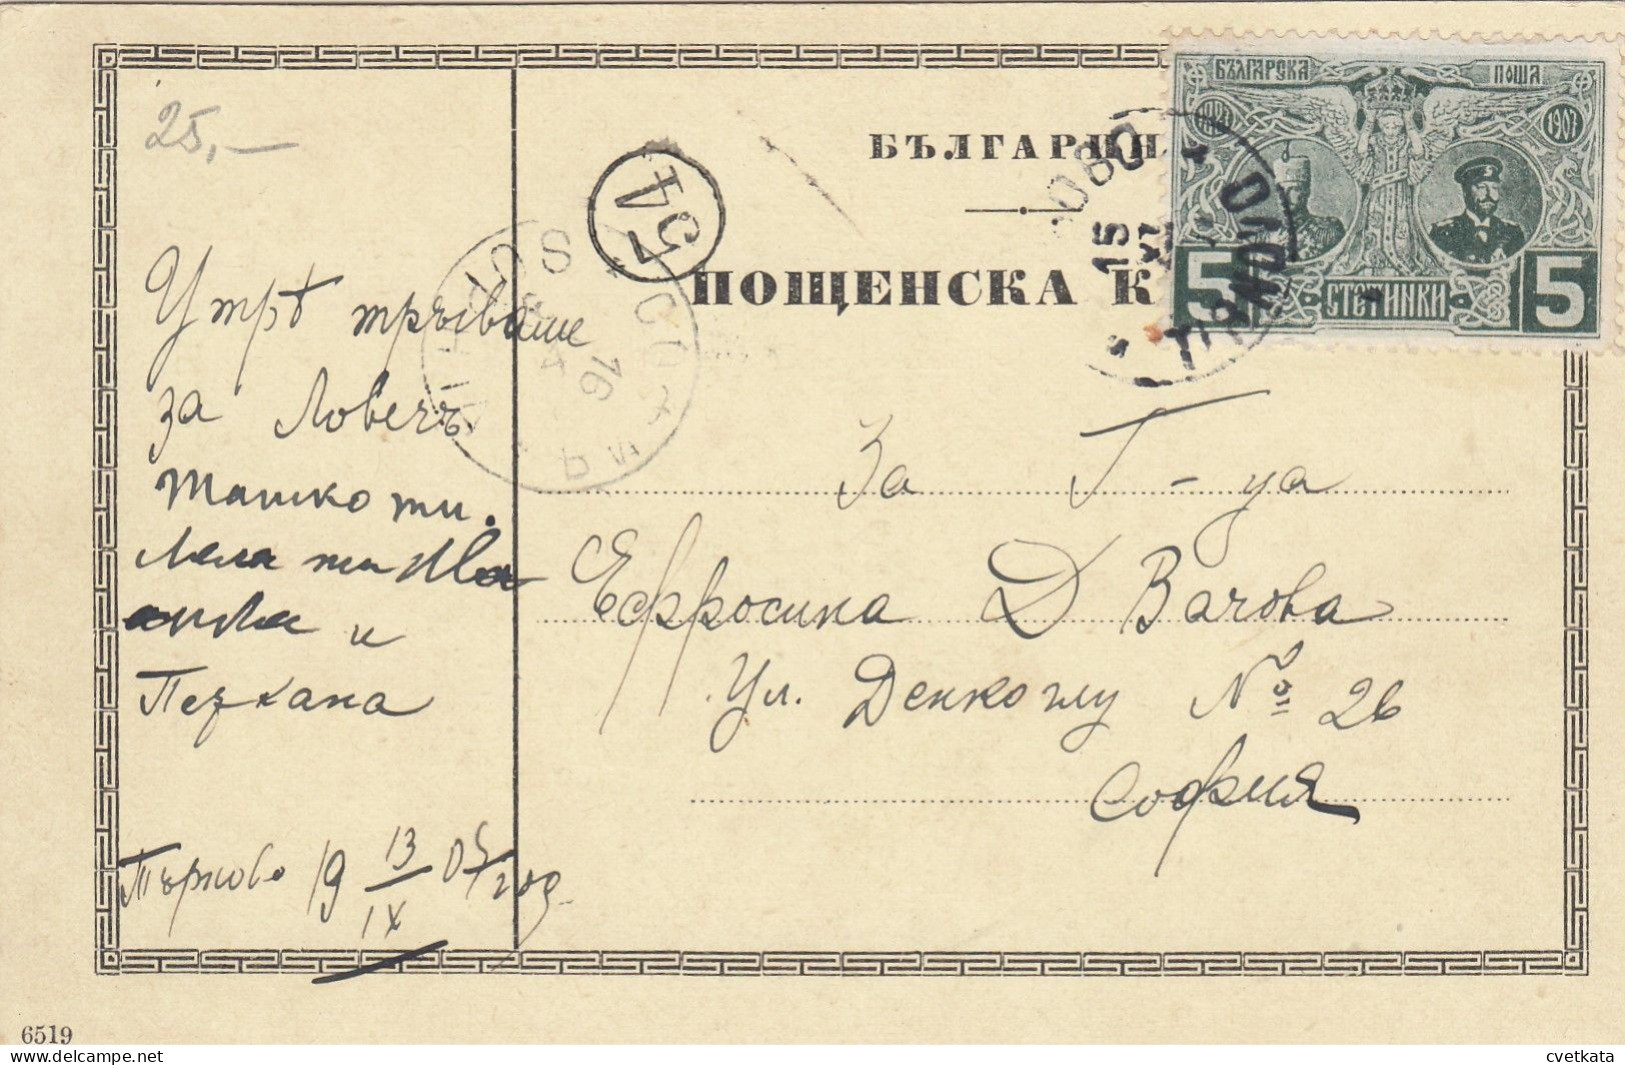 Post Card 1907 Bulgaria /King Ferdinand/traveled From Turnovo To Sofia /Mi: 66 - Lettres & Documents